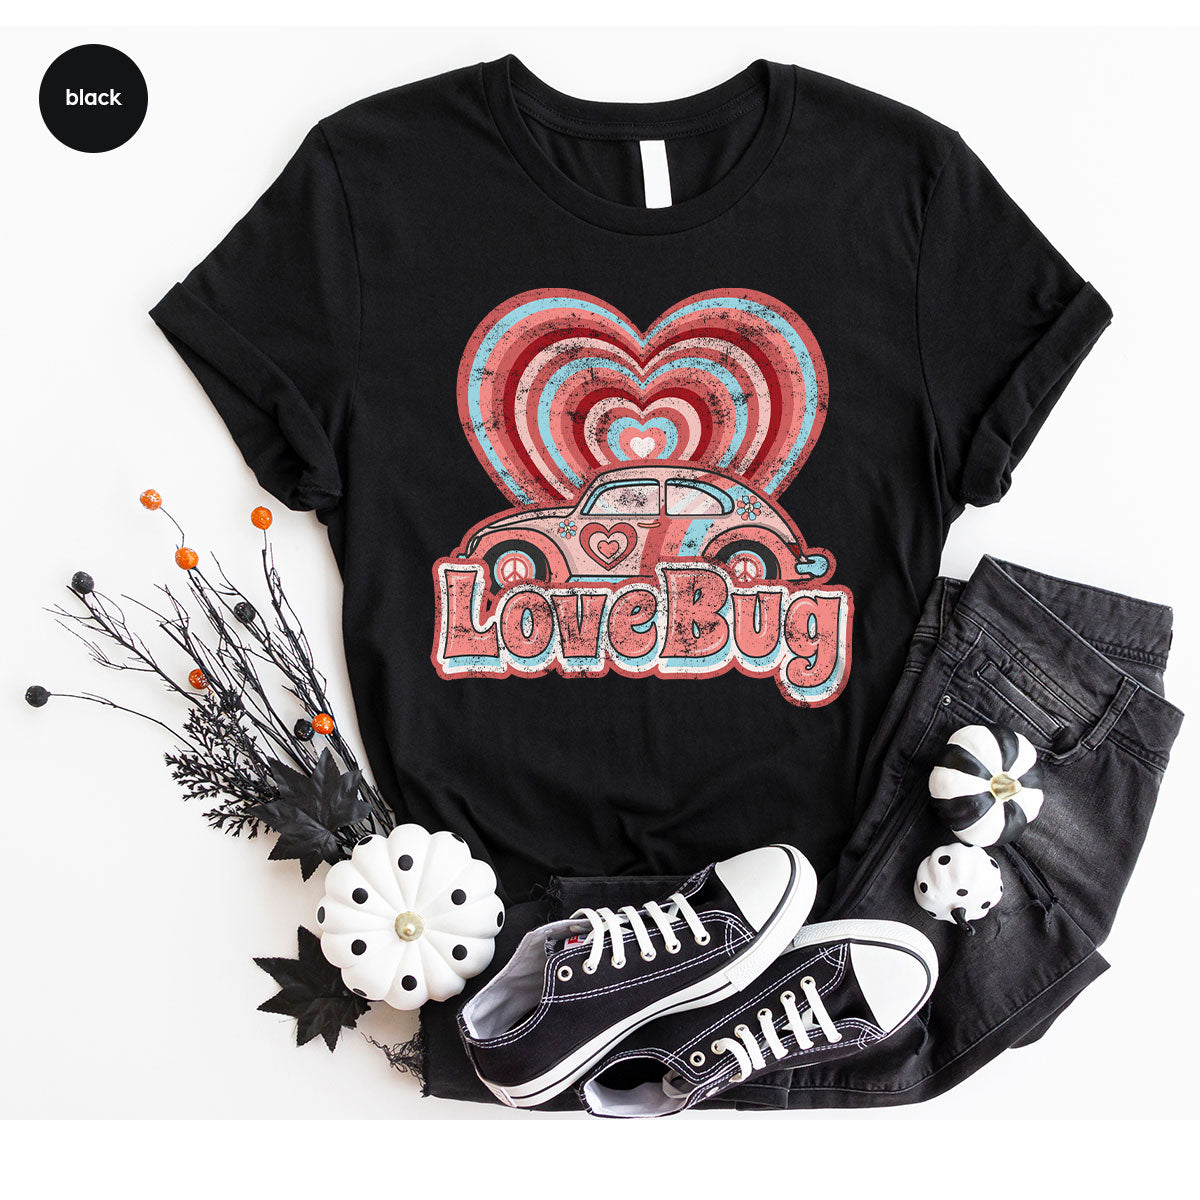 Love Boy T-Shirt, Men's Valentine's Day Special Shirt, Lover Men's Shirt